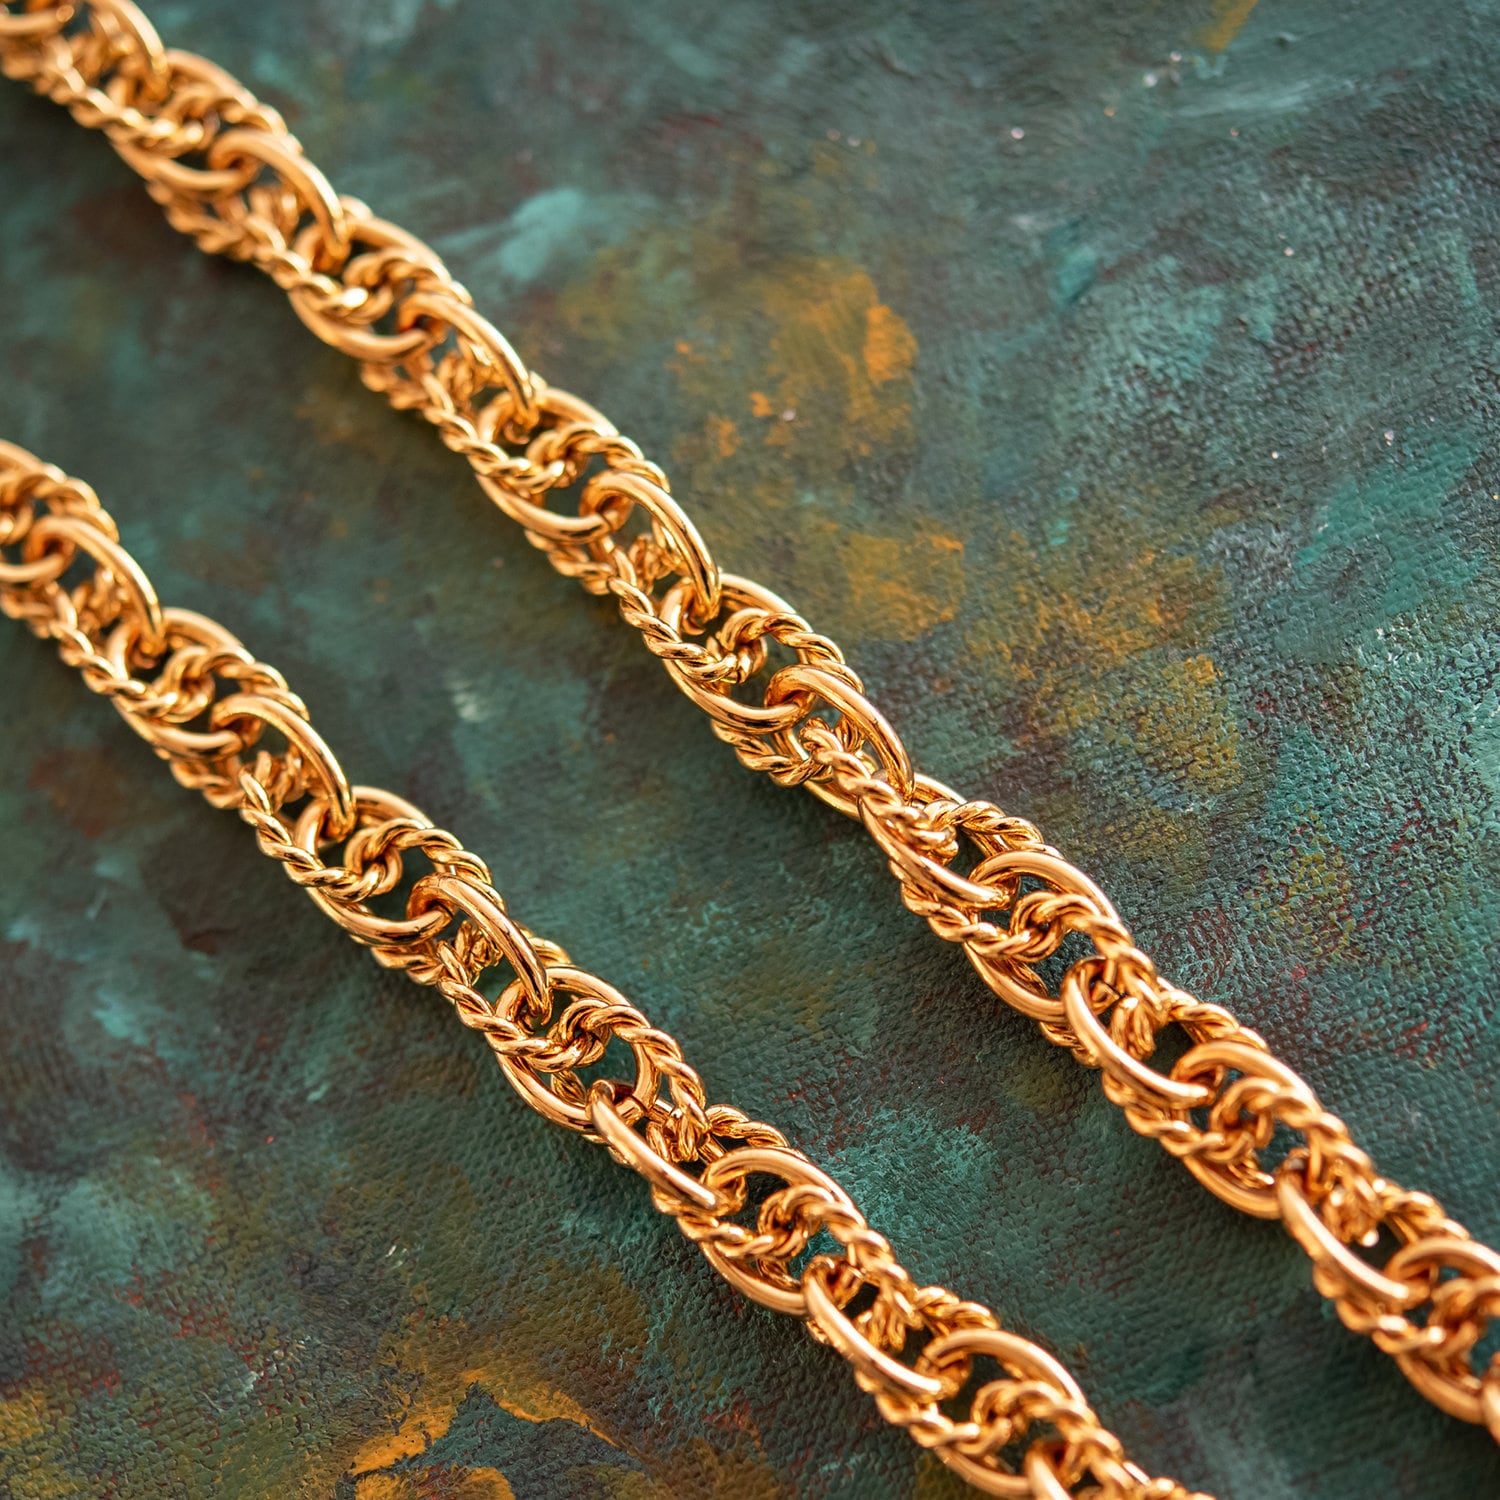 Vintage Oscar De La Renta 24 Inch Gold Tone Link Chain Necklace Designer Antique Womans Jewlery #OSN474 - Limited Stock - Never Worn